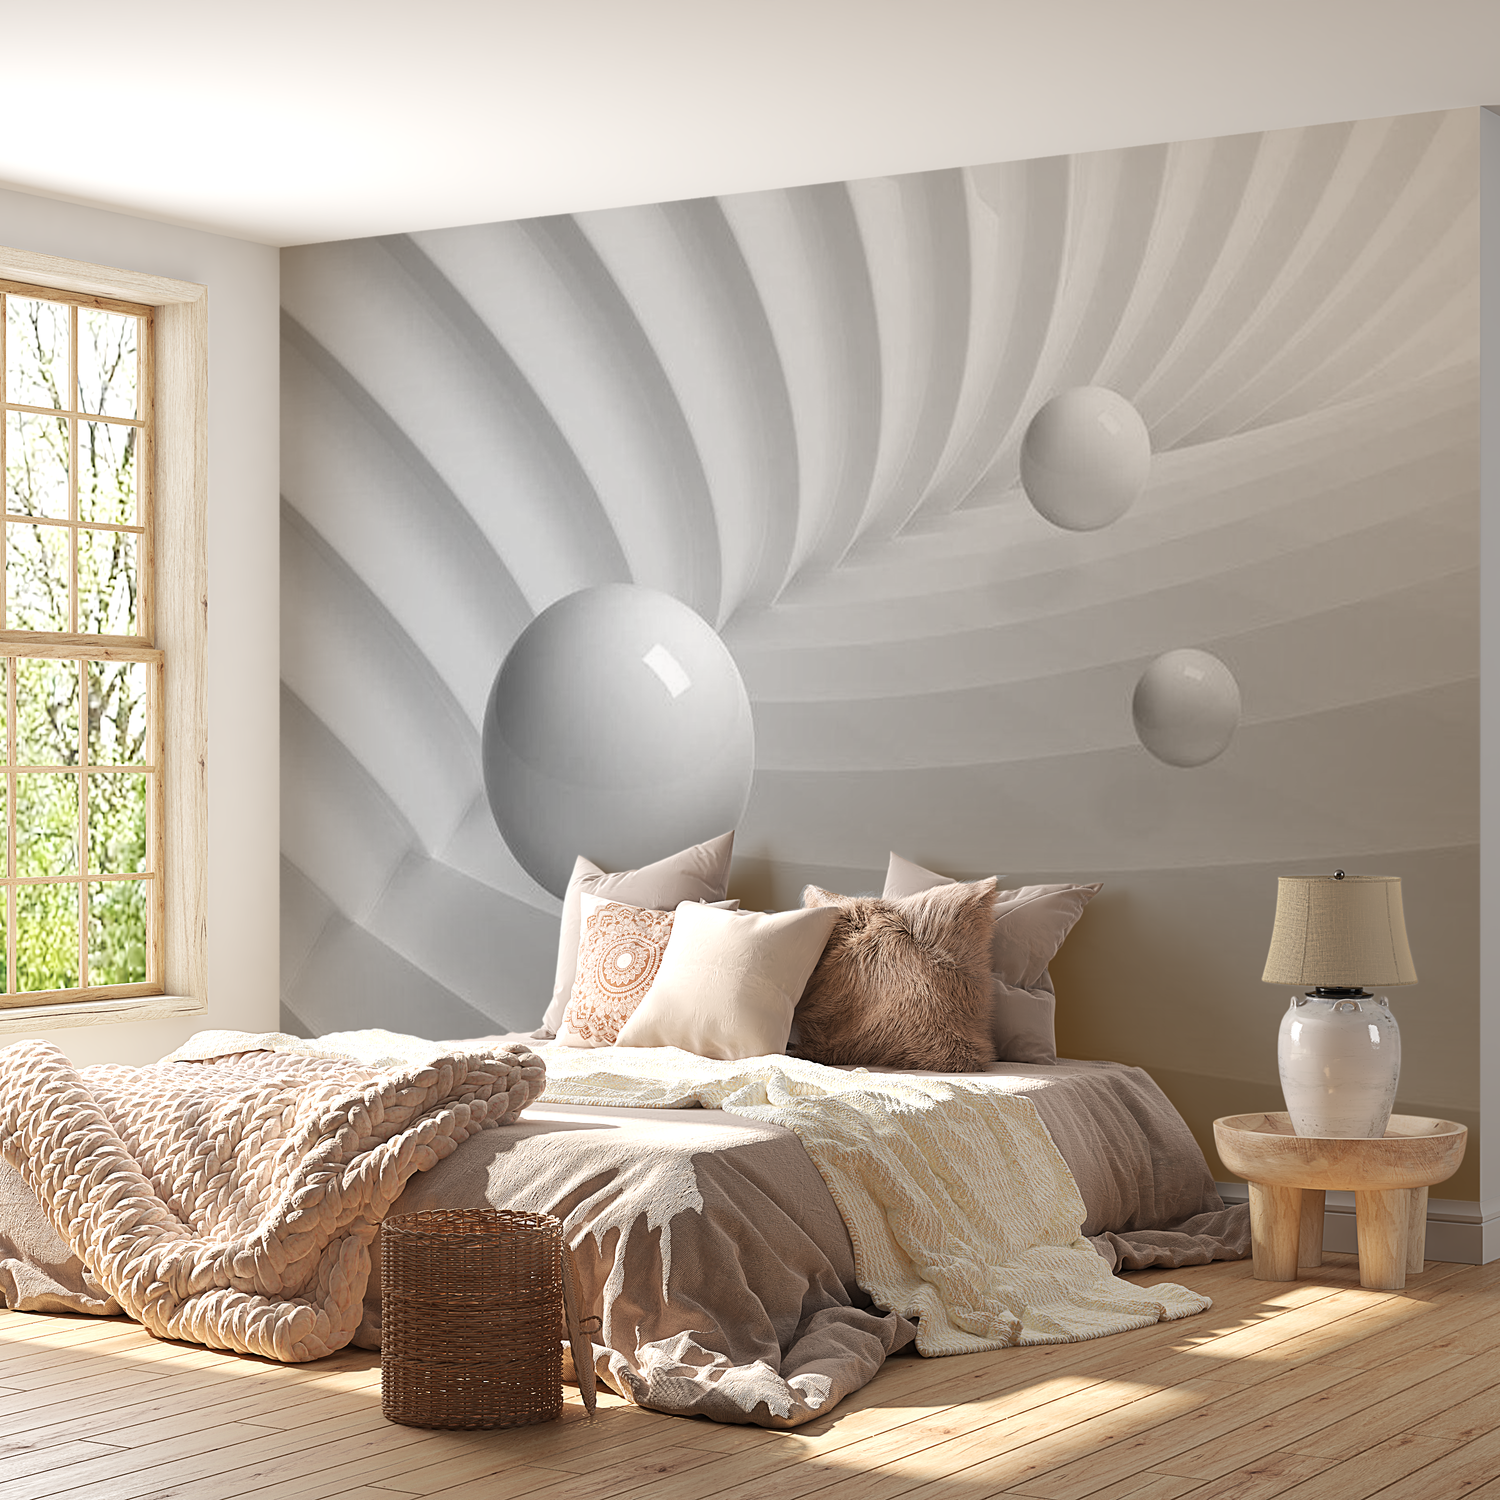 3D Illusion Wallpaper Wall Mural - White Symmetry 39"Wx27"H